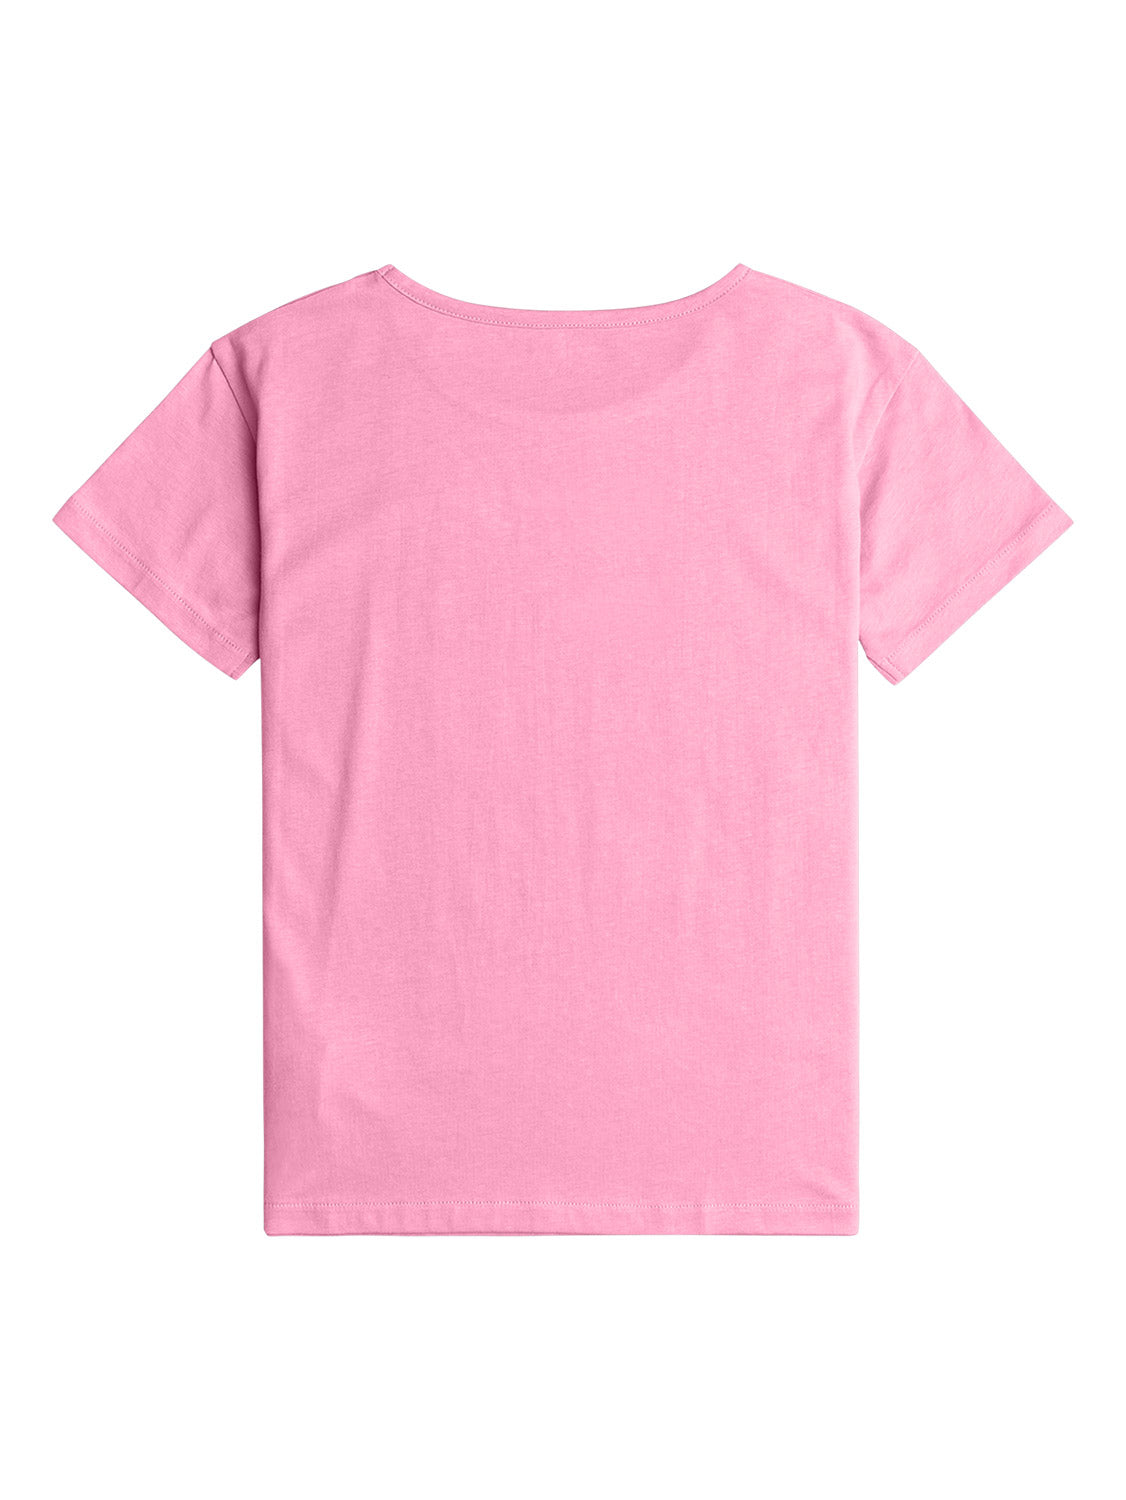 Roxy Pre-Girls Mountain Feel T-Shirt